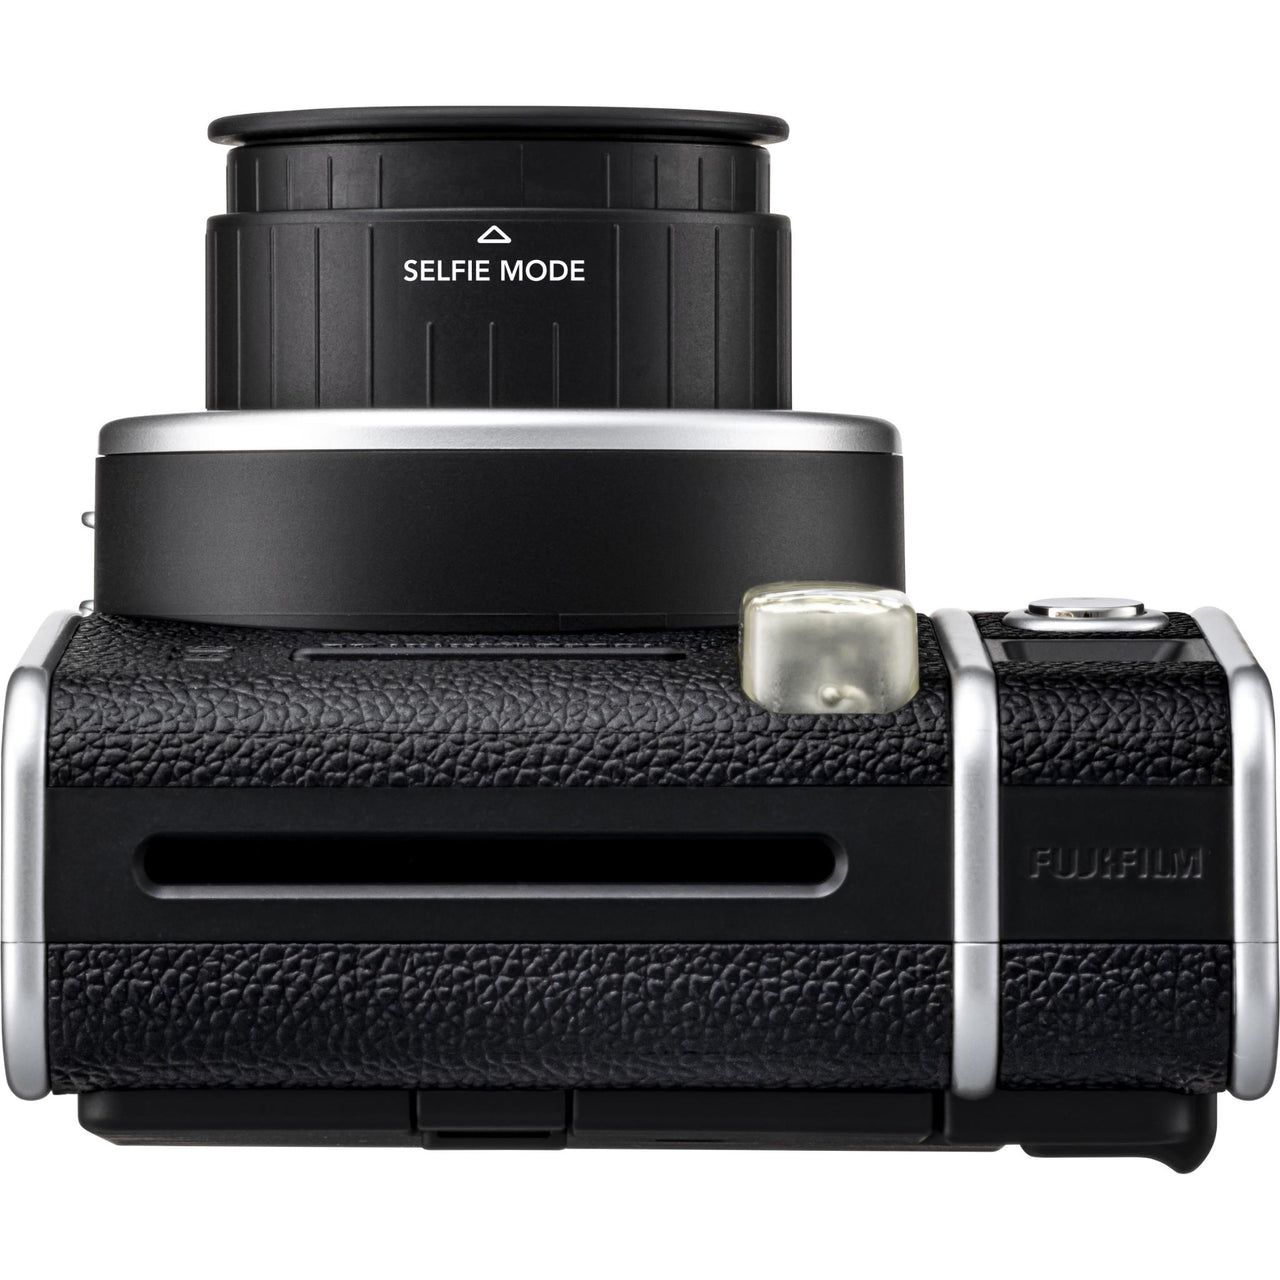 Fujifilm Instax mini 40 Instant Camera - Black Fujifilm